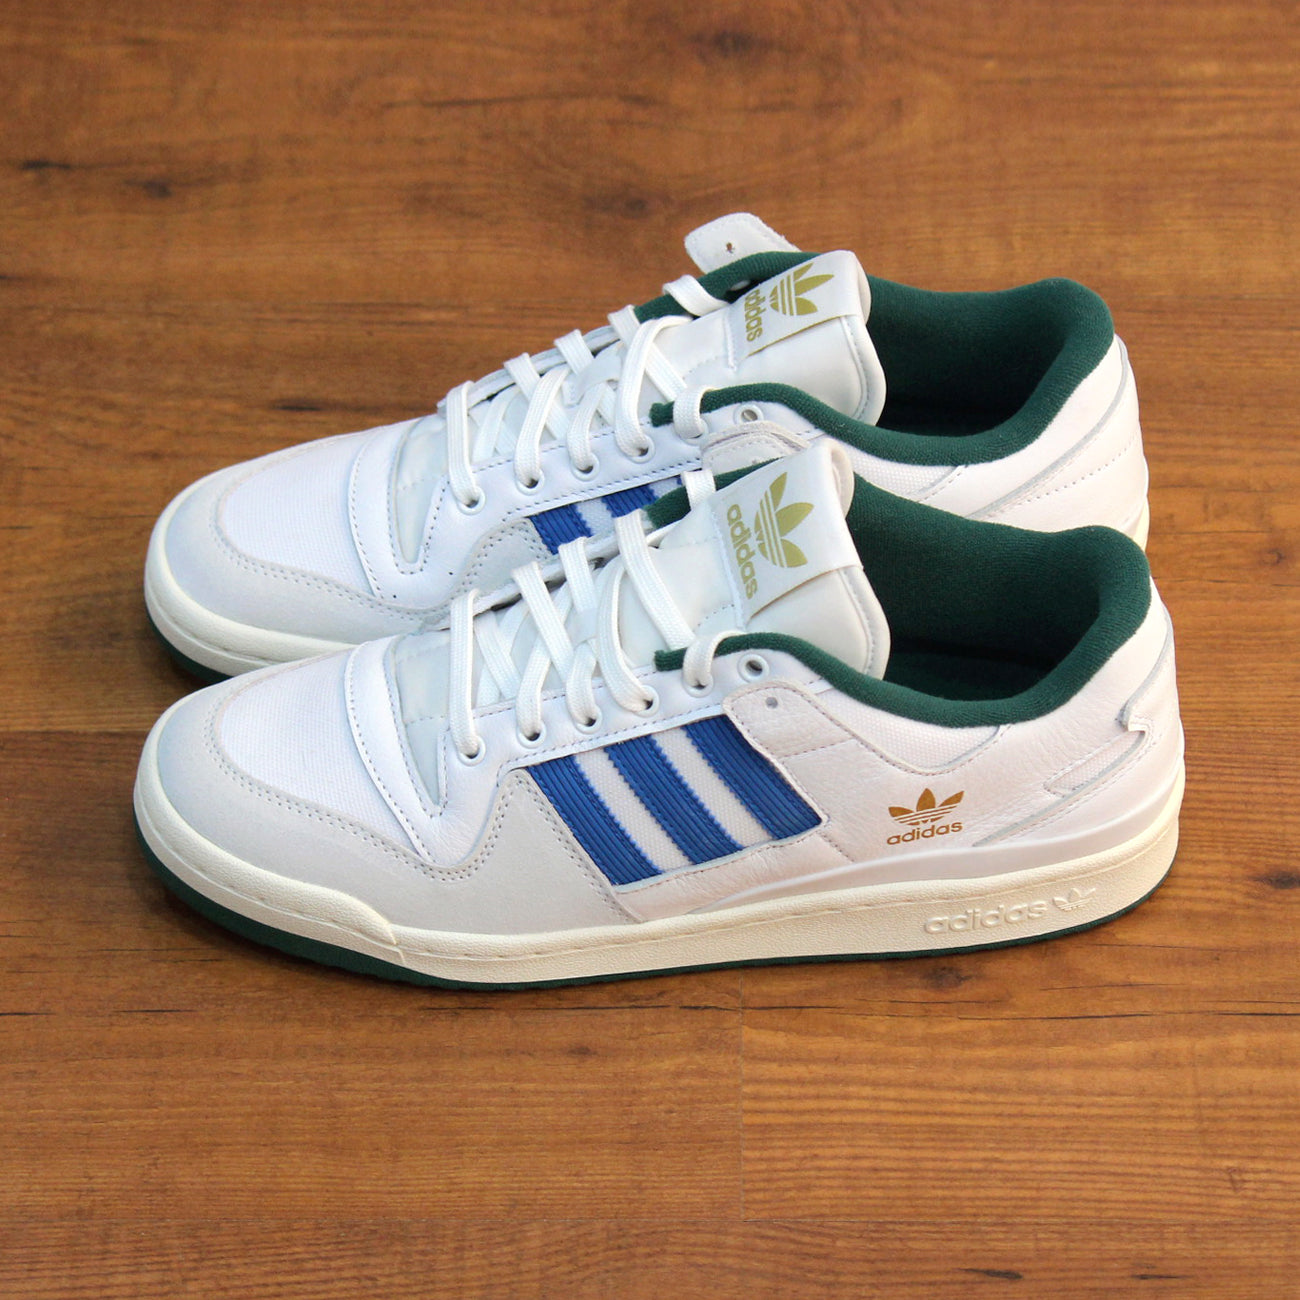 ADIDAS 84 LOW Footwear White / Bluebird / Collegiate Green FCHSKATE